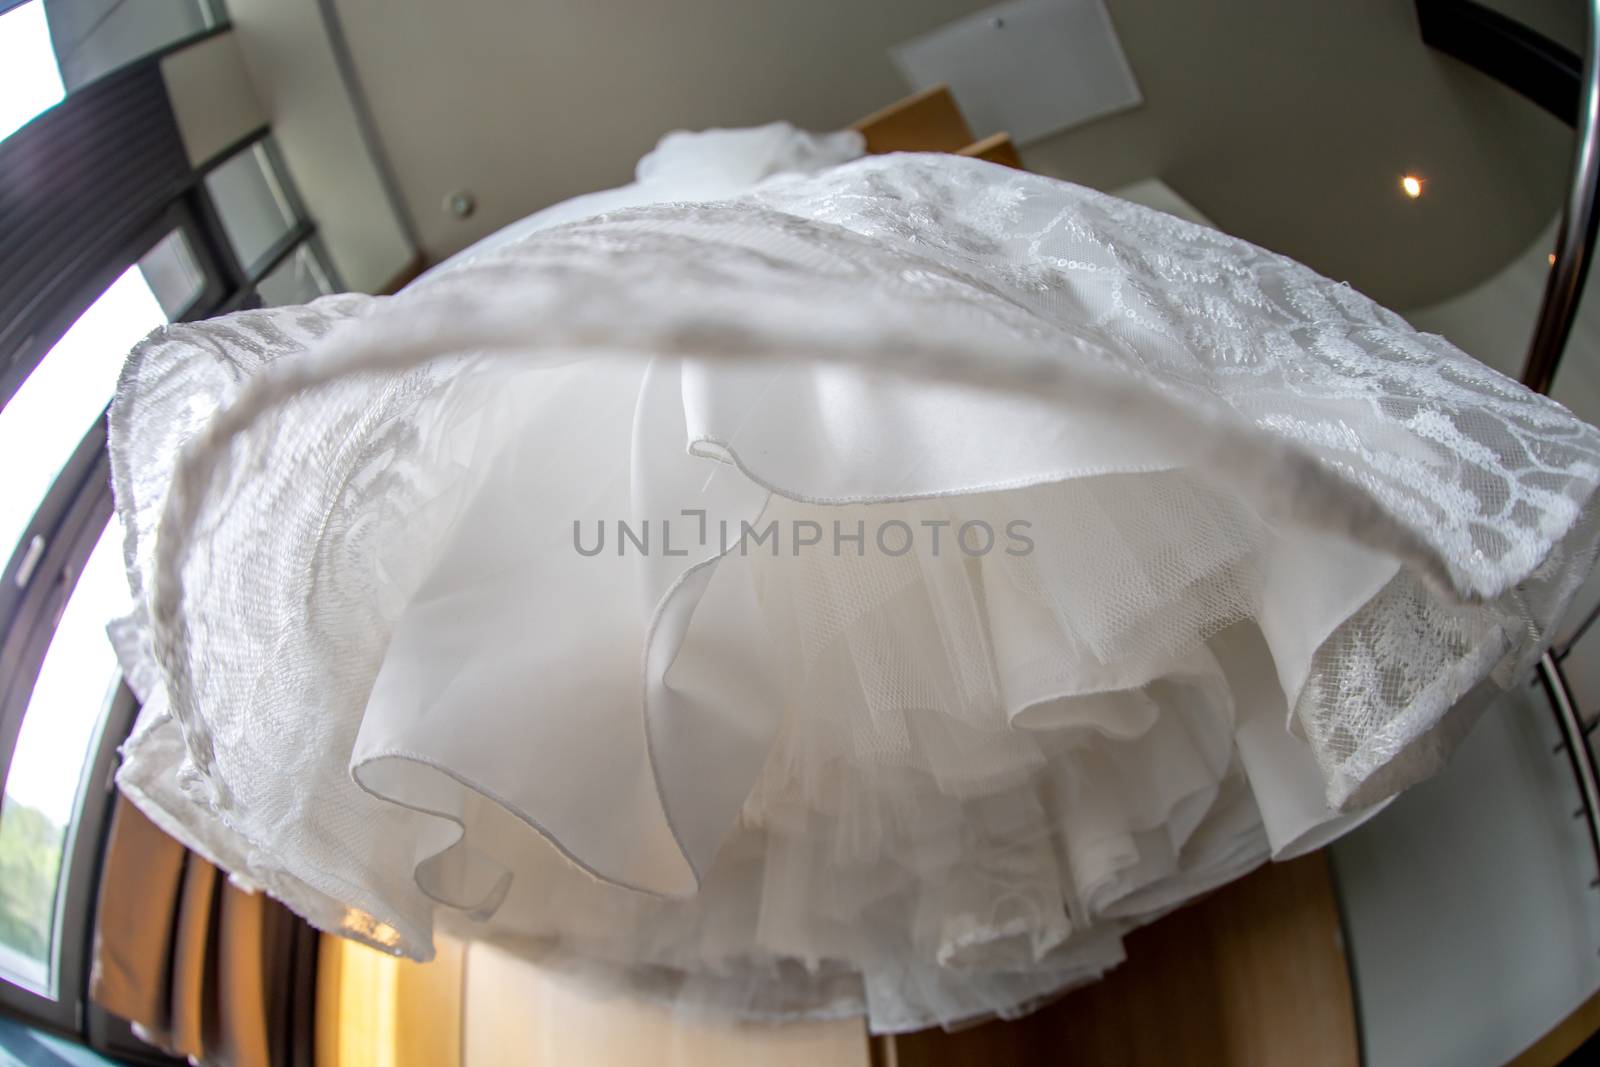 Bridal dress hanging at wooden closet by fotorobs